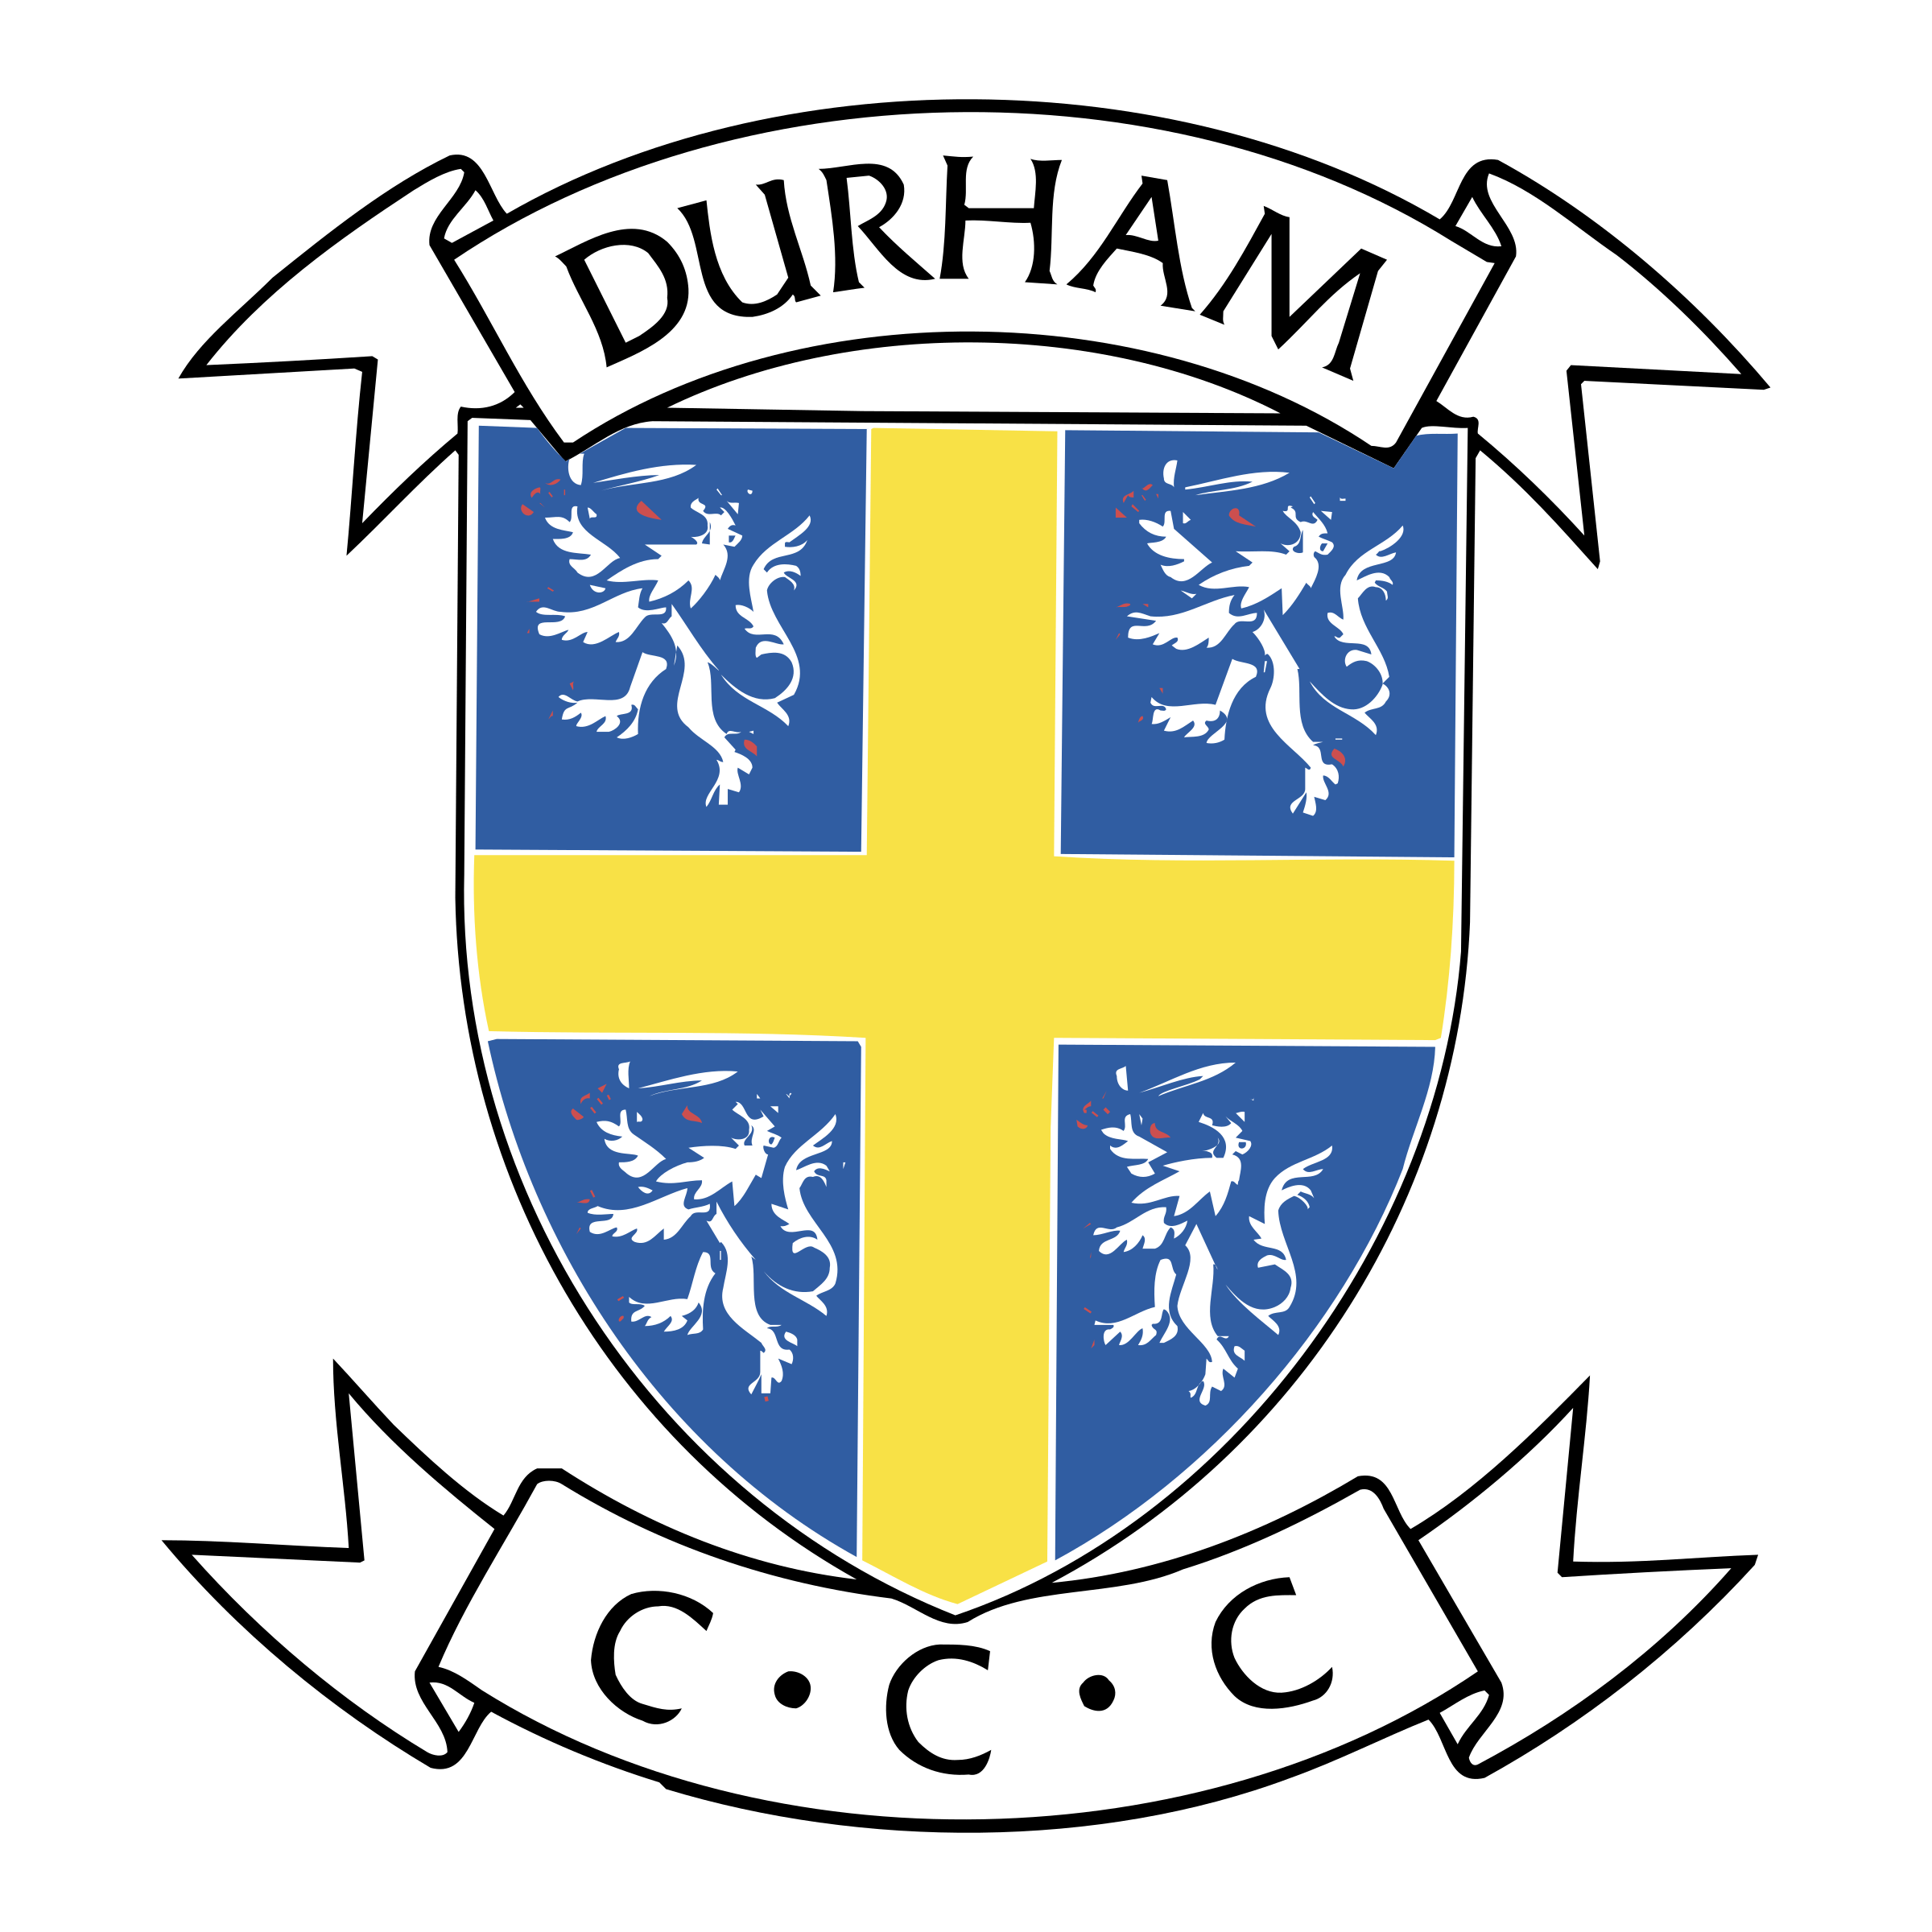 Durham Logo - Durham Logo PNG Transparent & SVG Vector - Freebie Supply